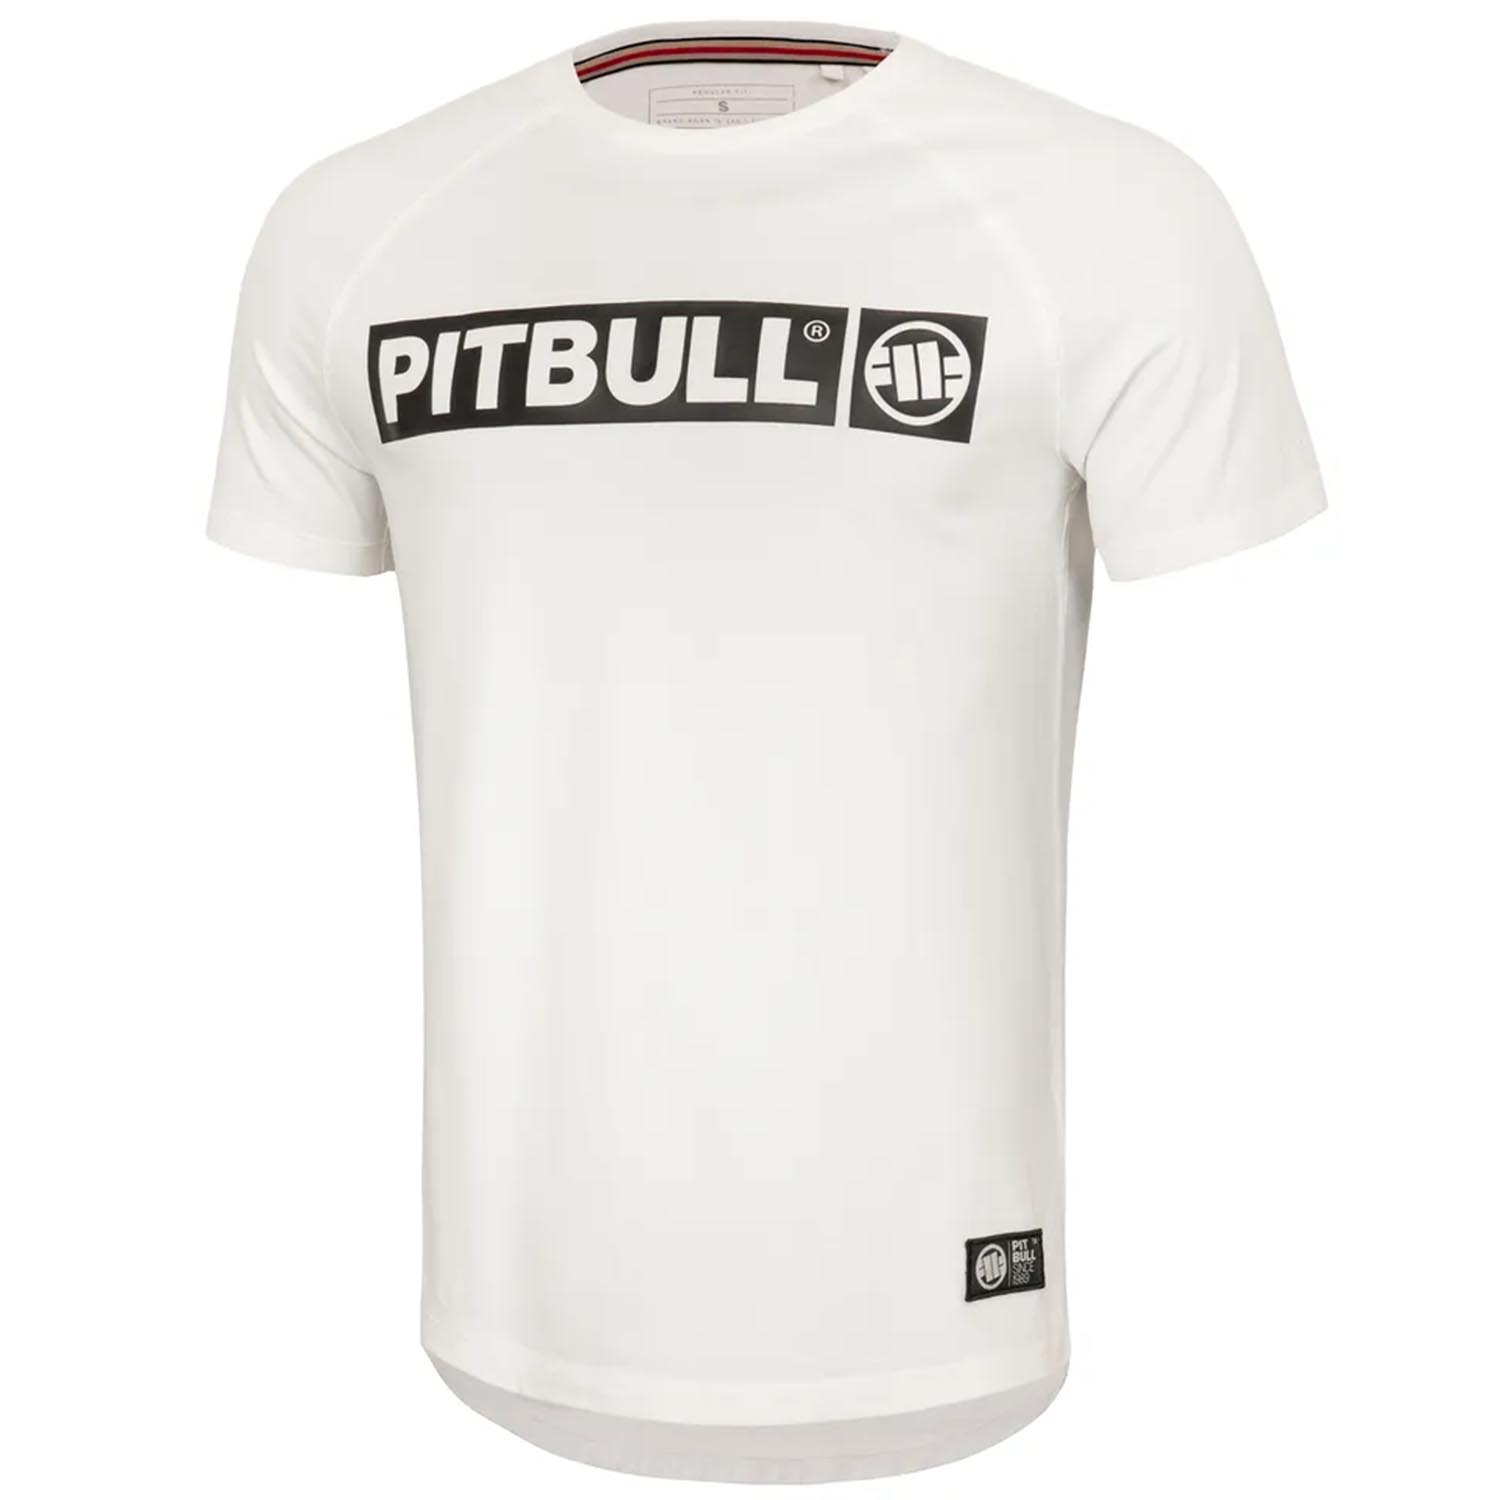 Pit Bull West Coast T-Shirt, Hilltop 210 Spandex, white, XXXL